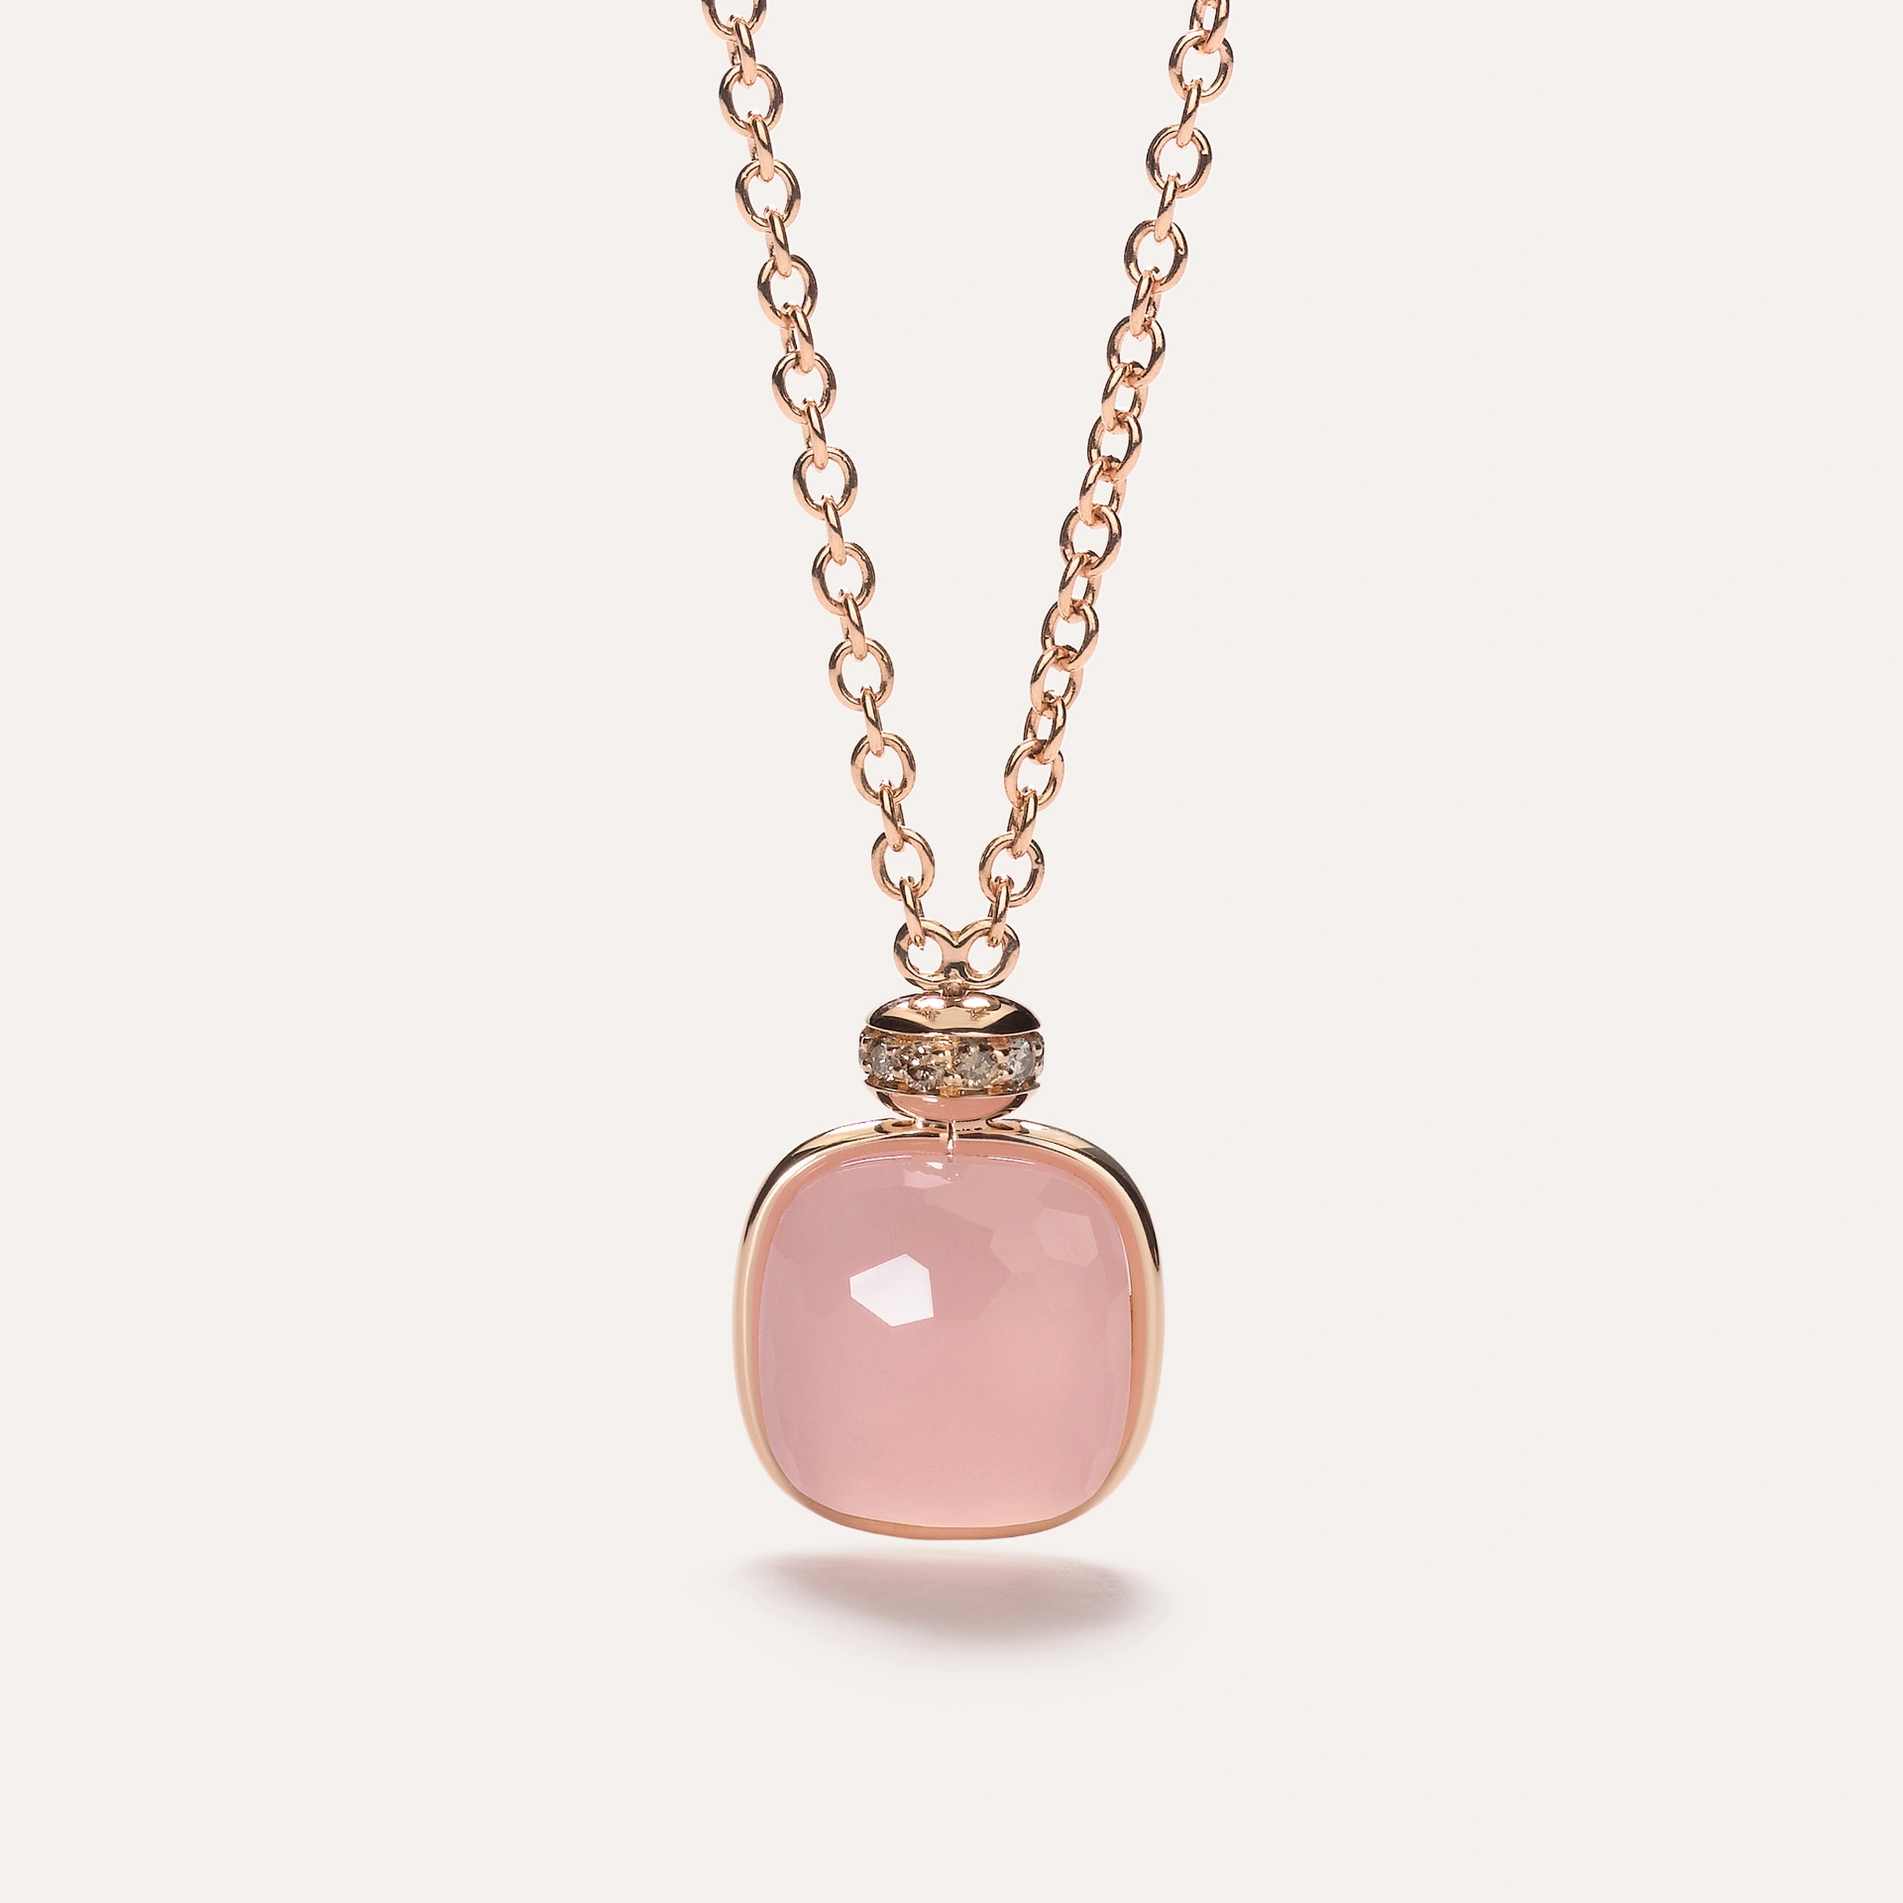 Pomellato_necklace-nudo-white-gold-18kt-rose-gold-18kt-rose-quartz-chalcedony-diamond